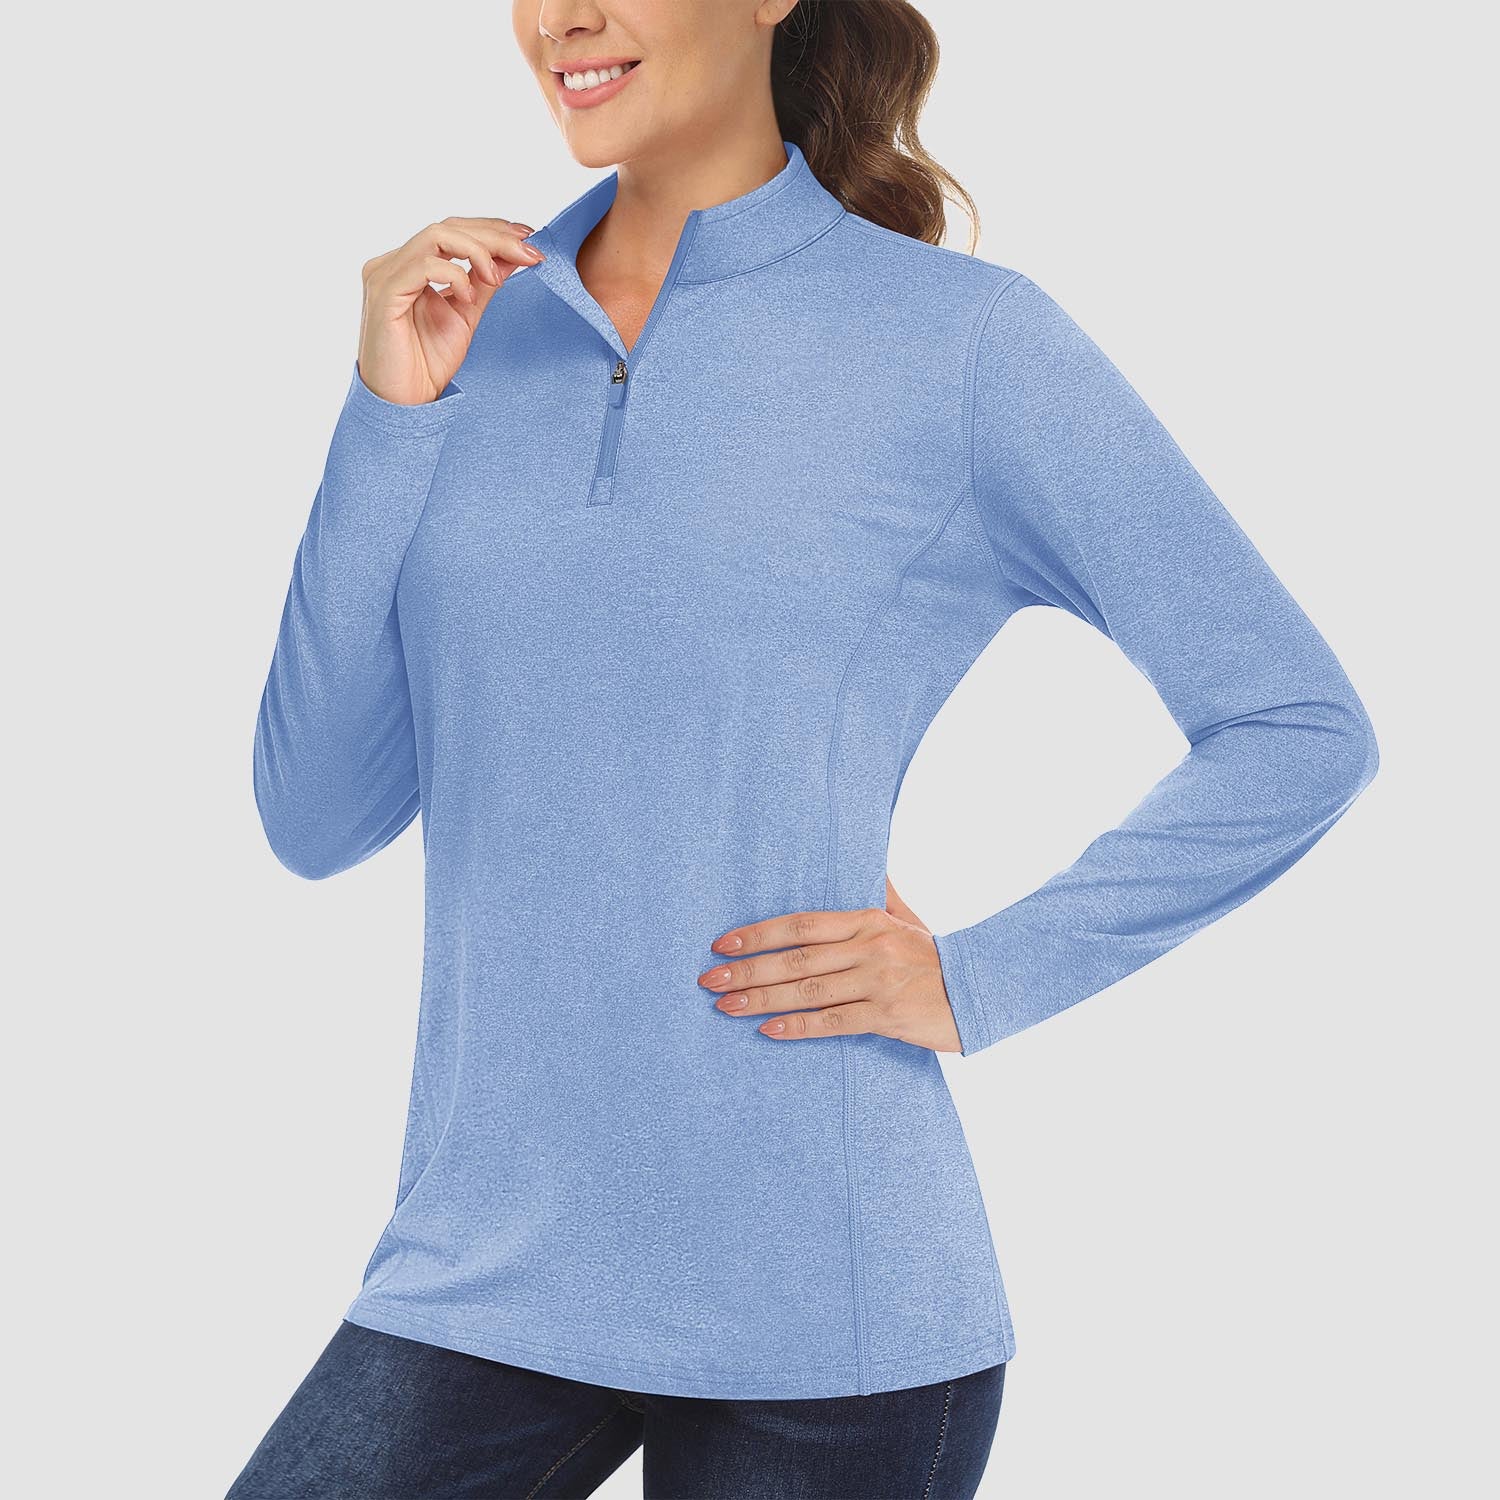 Women's Sun Protection Shirt Long Sleeve 1/4 Zip UPF50+ UV Shirts Quick Dry